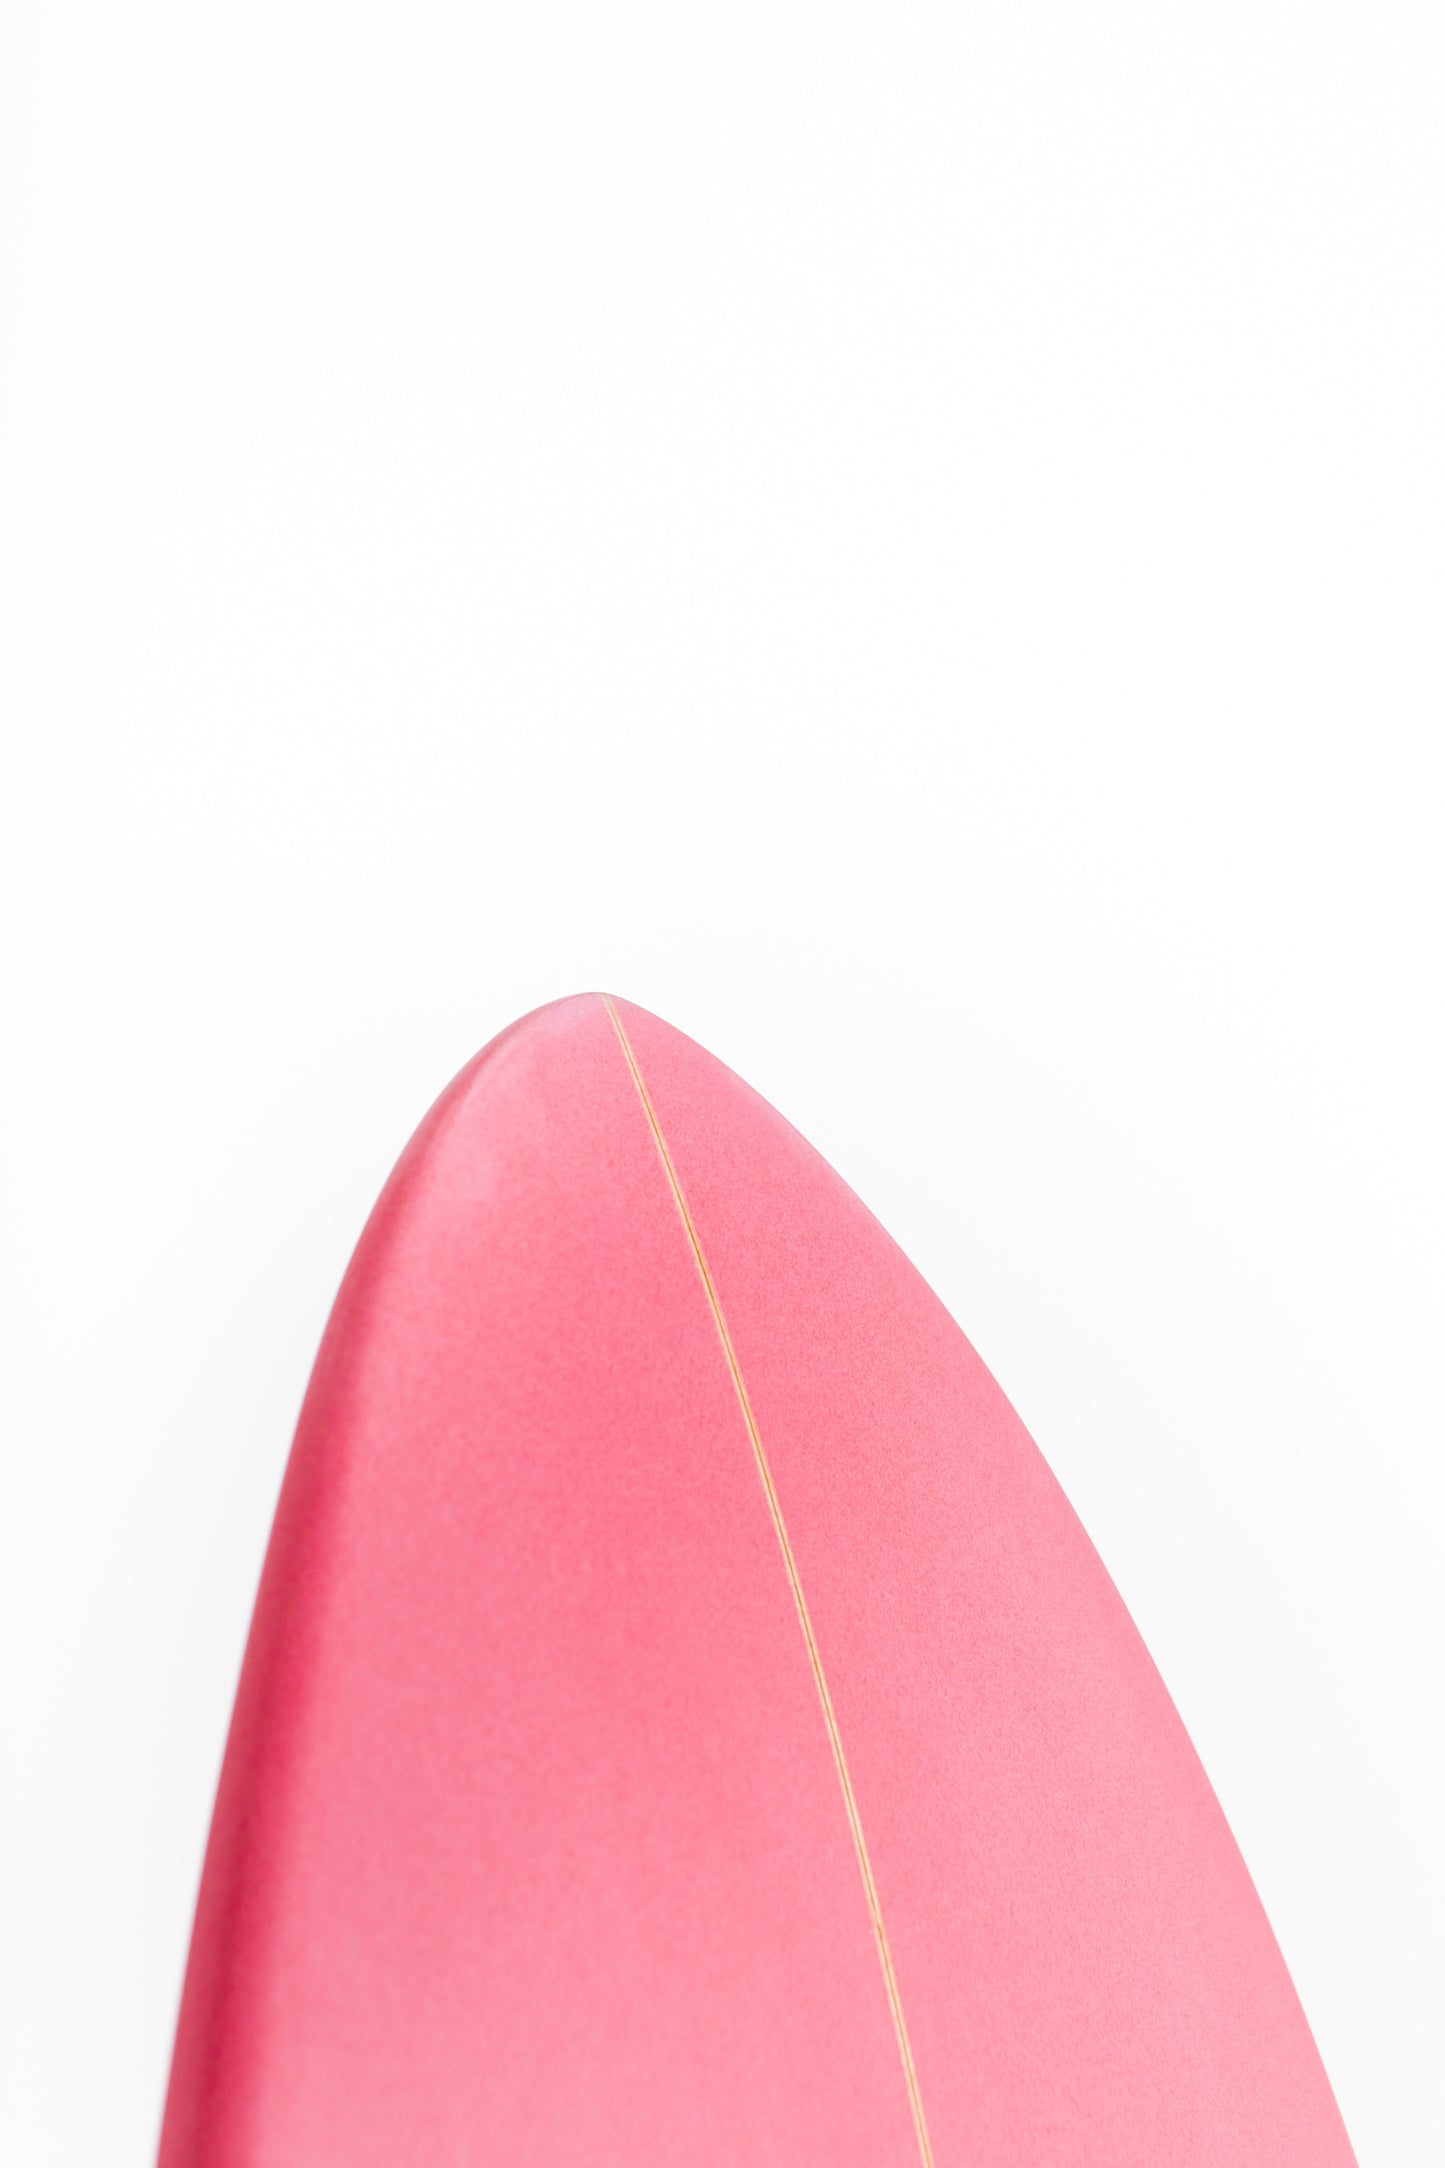 
                  
                    Pukas Surf Shop - Copia de DHD - MINI TWIN II by Darren Handley - 5'5" x 20 1/2 x 2 5/16 x 30L. - DHD80053
                  
                